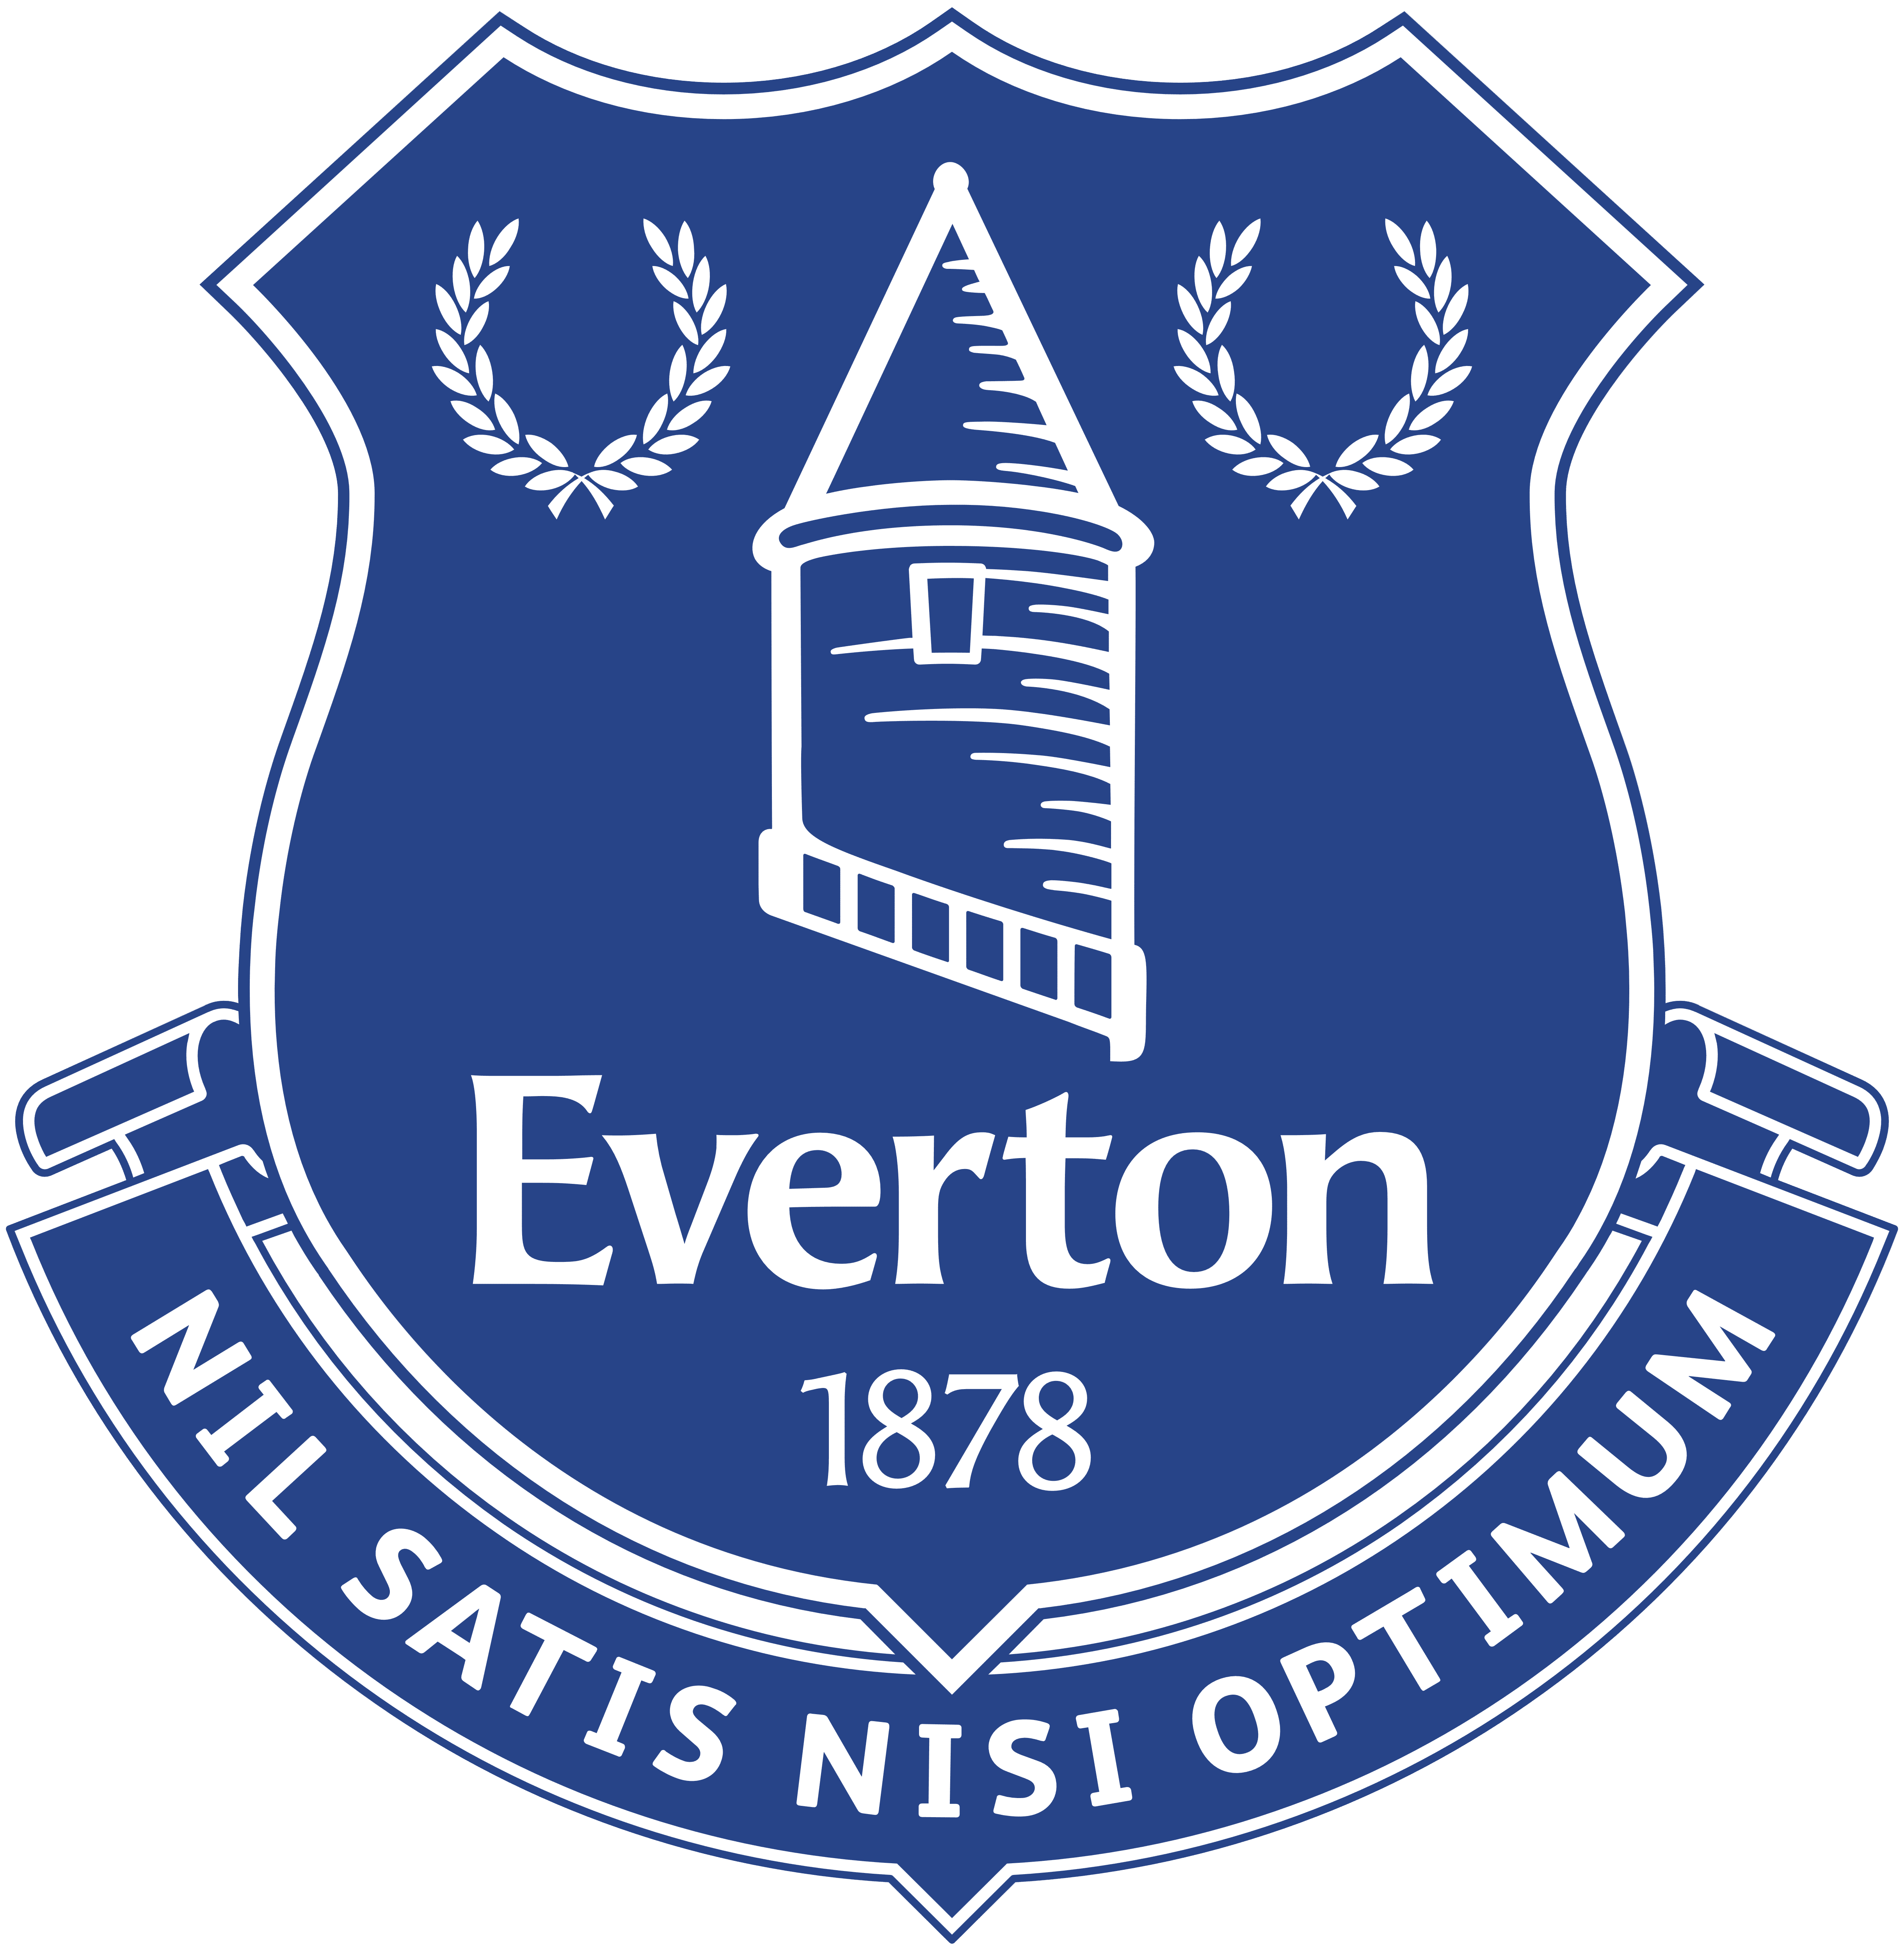 Everton Football Club Crest Enamel Finish Lapel Pin Badge with Free UK P&P 